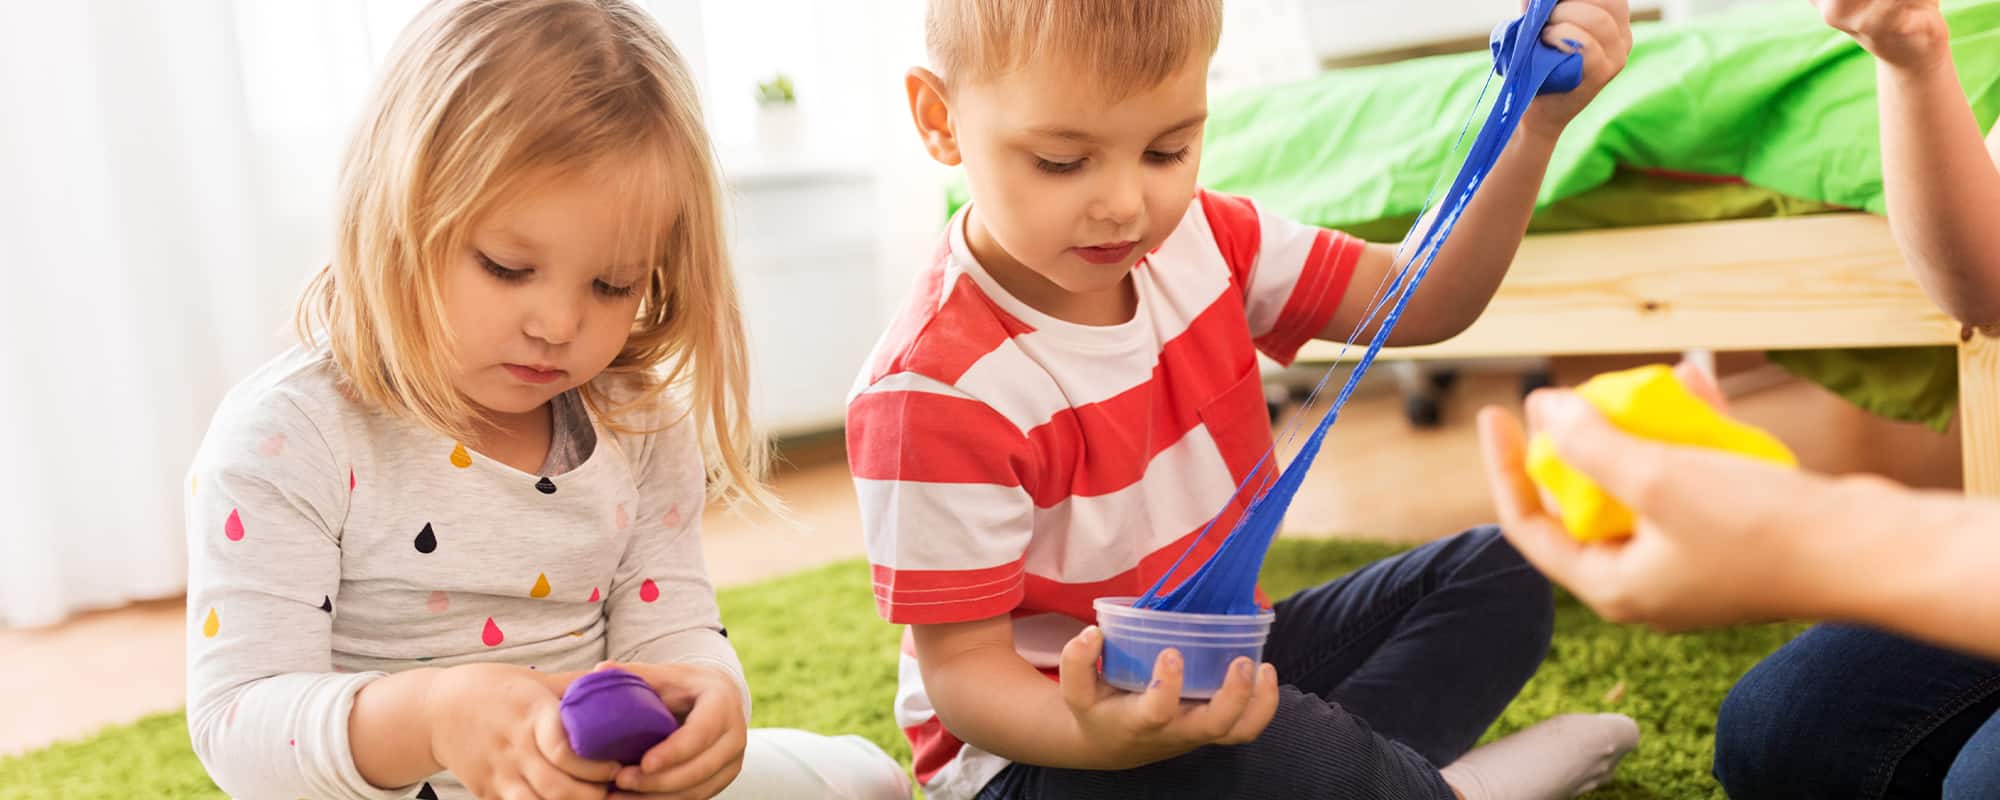 Sensory Play Develops Excellent Skills For Kids